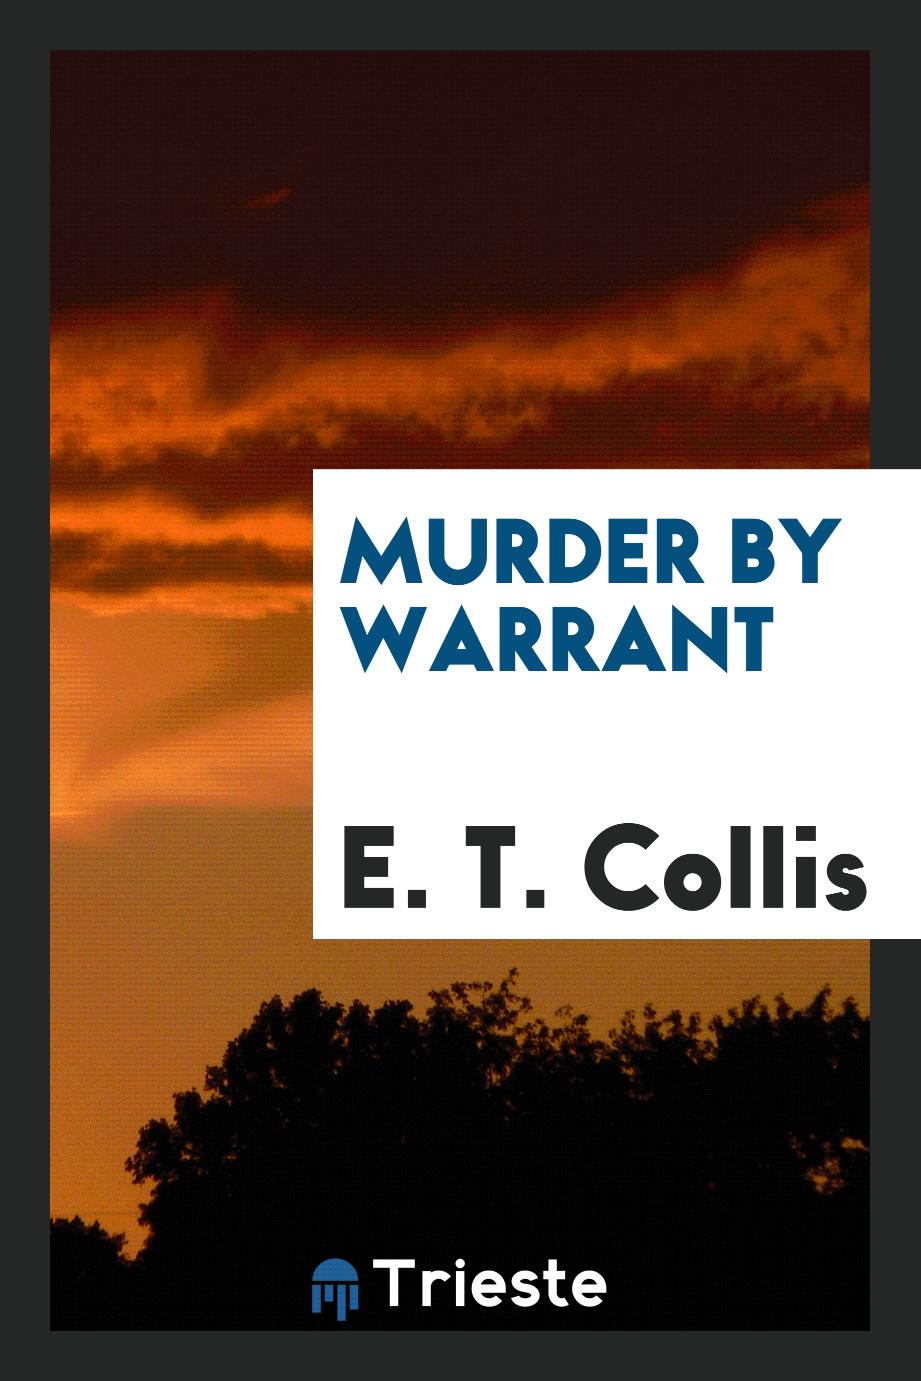 Murder by warrant